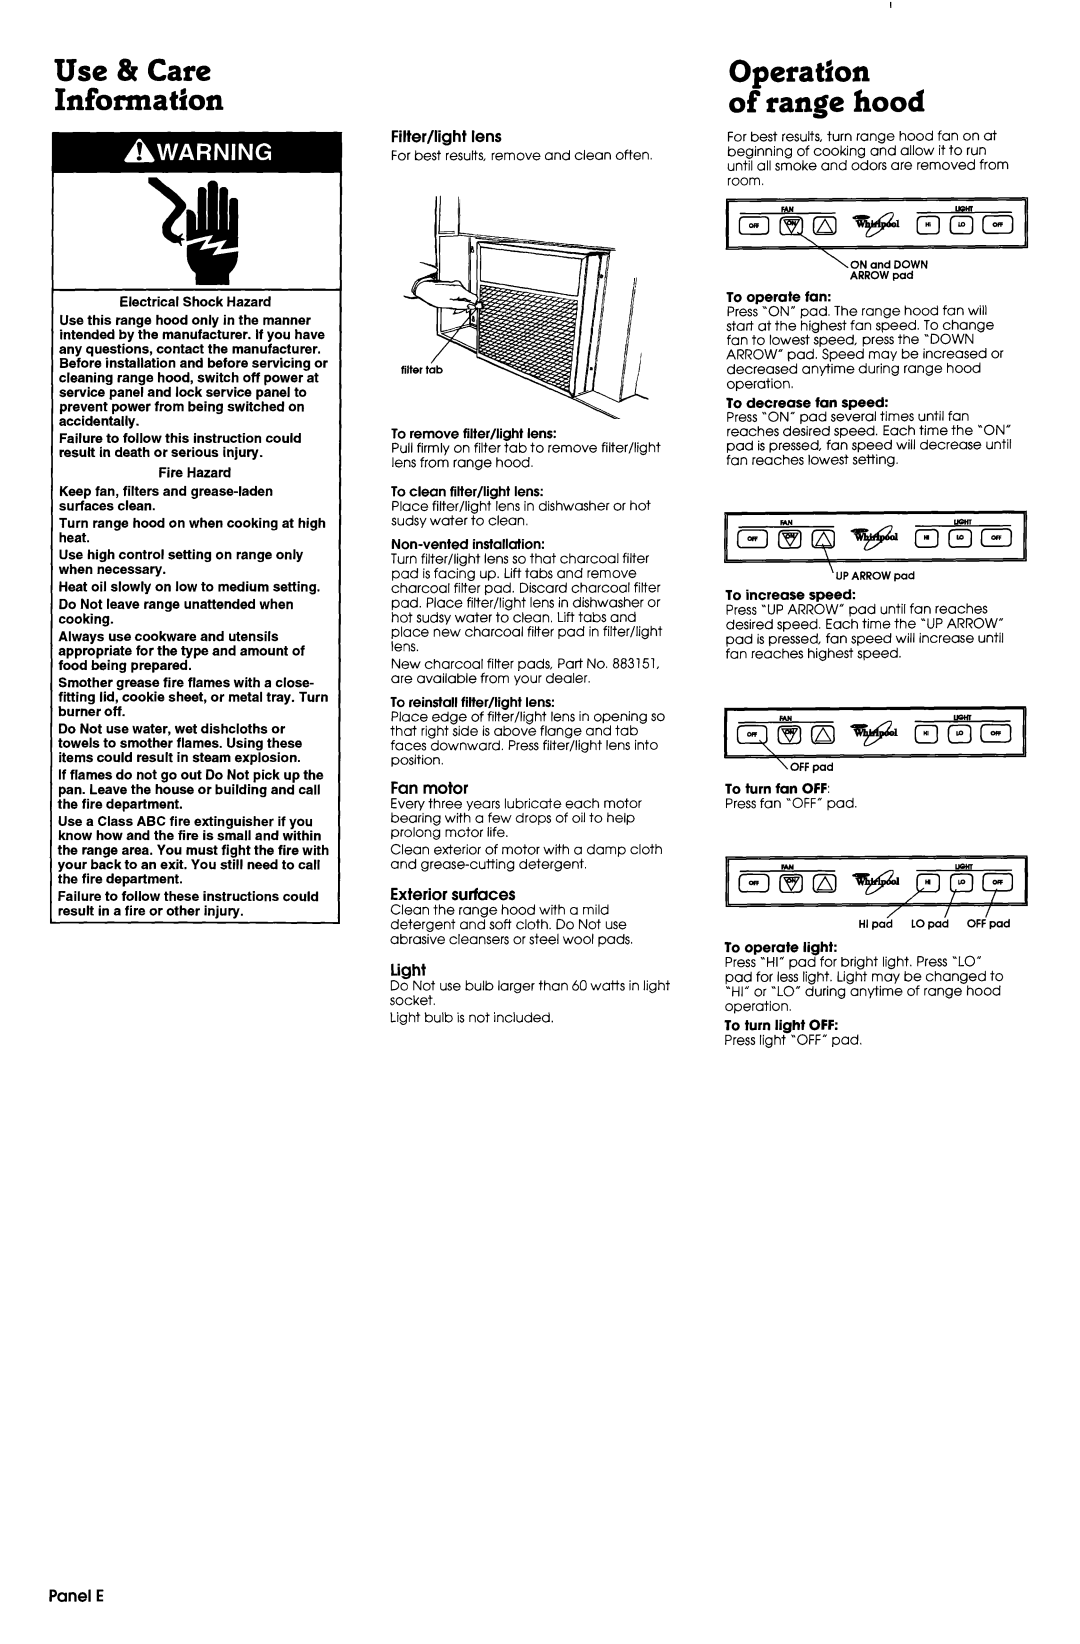 Whirlpool 761883306 manual Use & Care Information, Operation of range hood, To operate fan, To decrease fan speed 